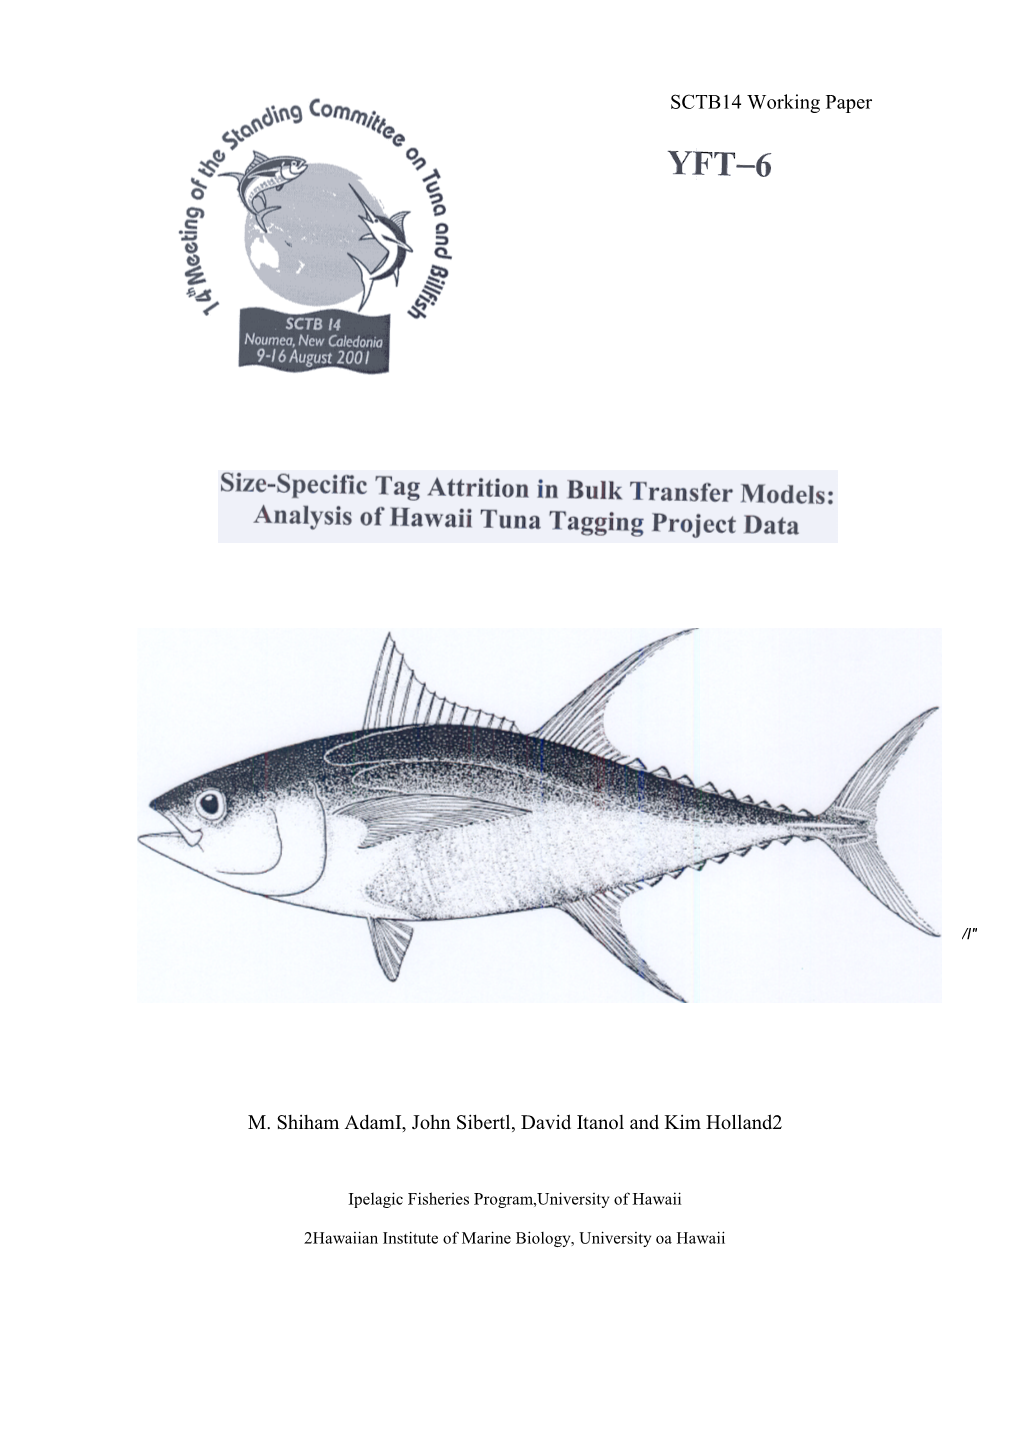 Analysis of Hawaii Tuna Tagging Project Data